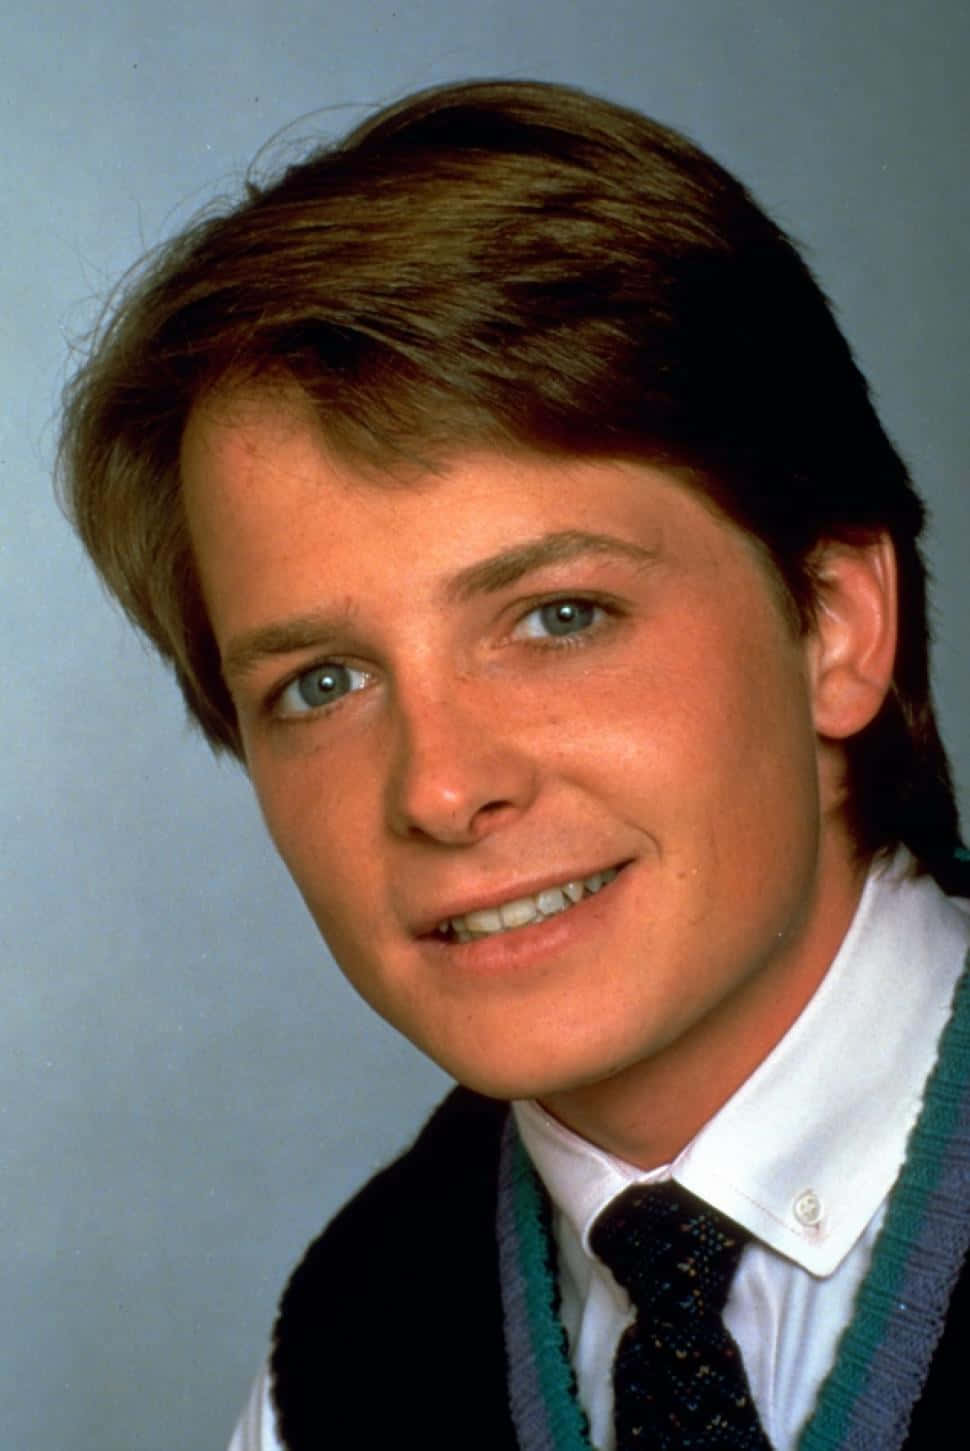 Michael J. Fox, Actor And Parkinson's Disease Advocate Background